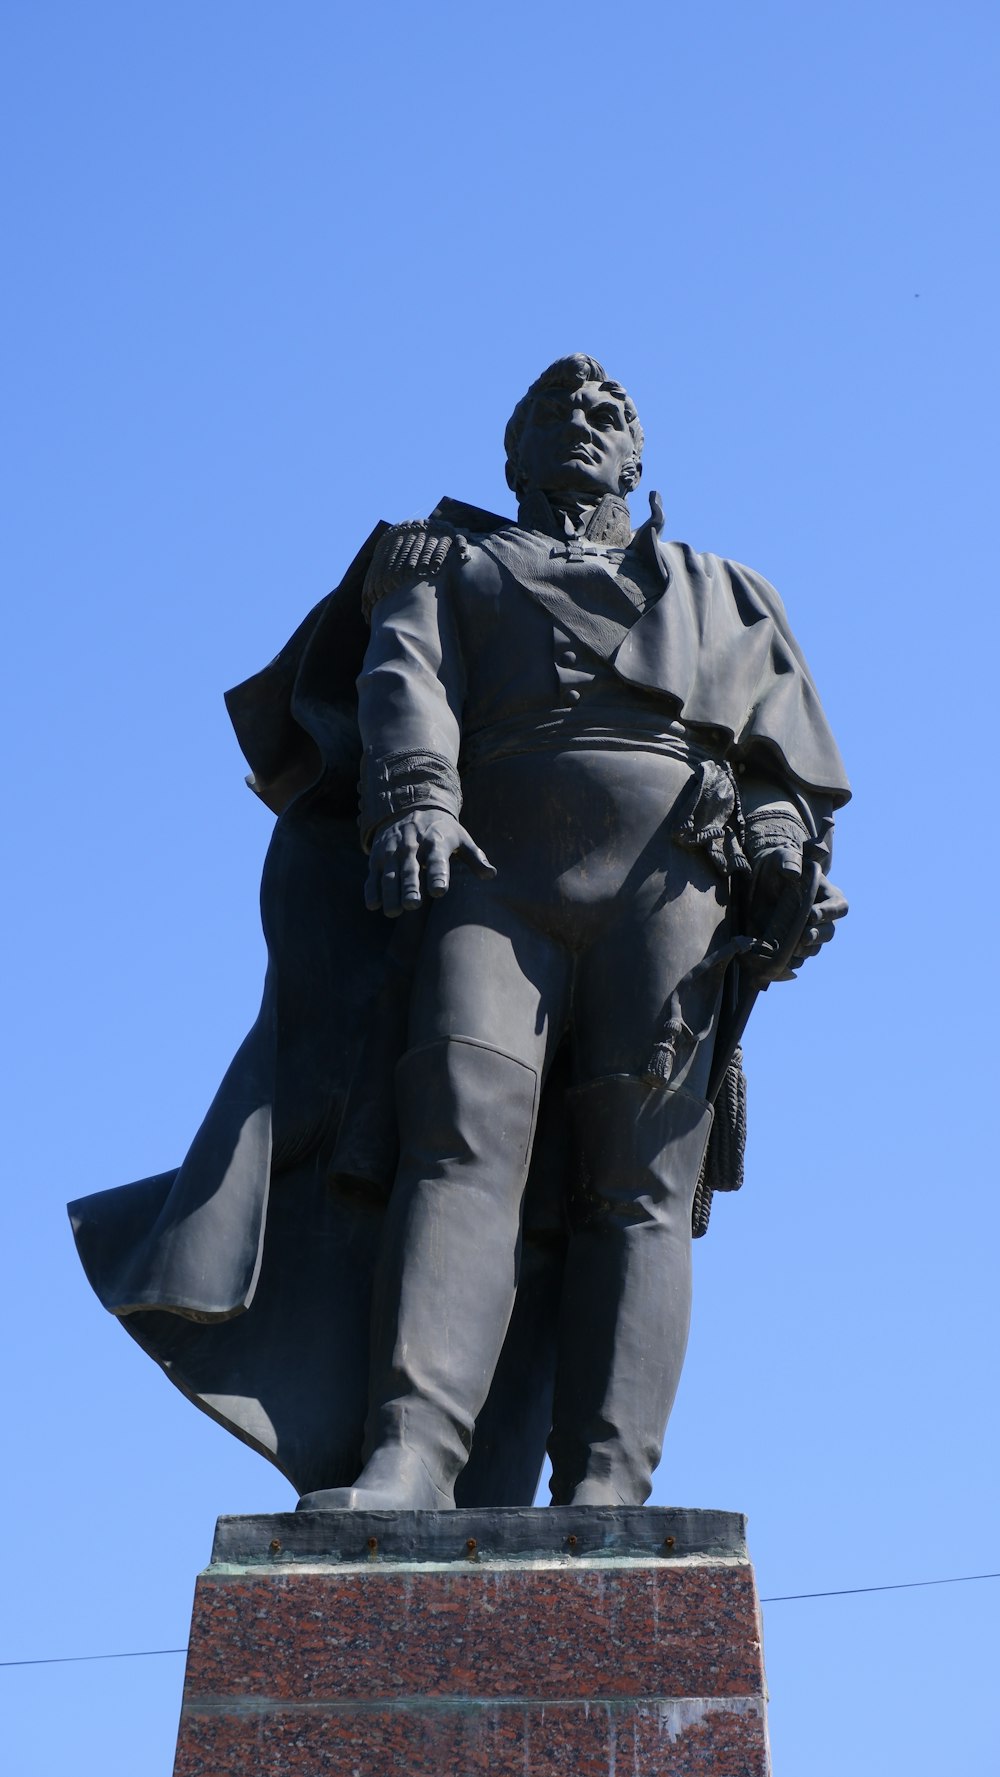 a statue of a man